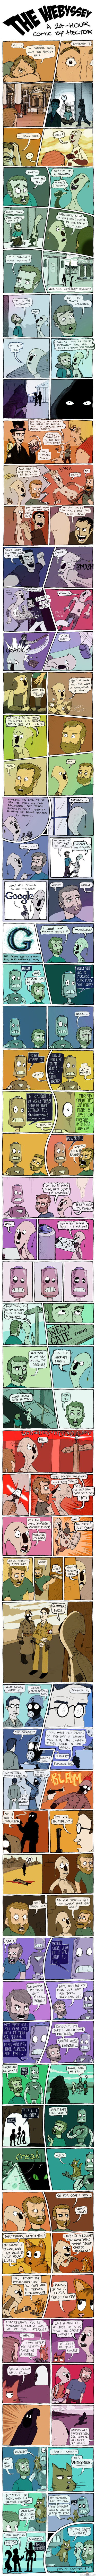 The internet comic